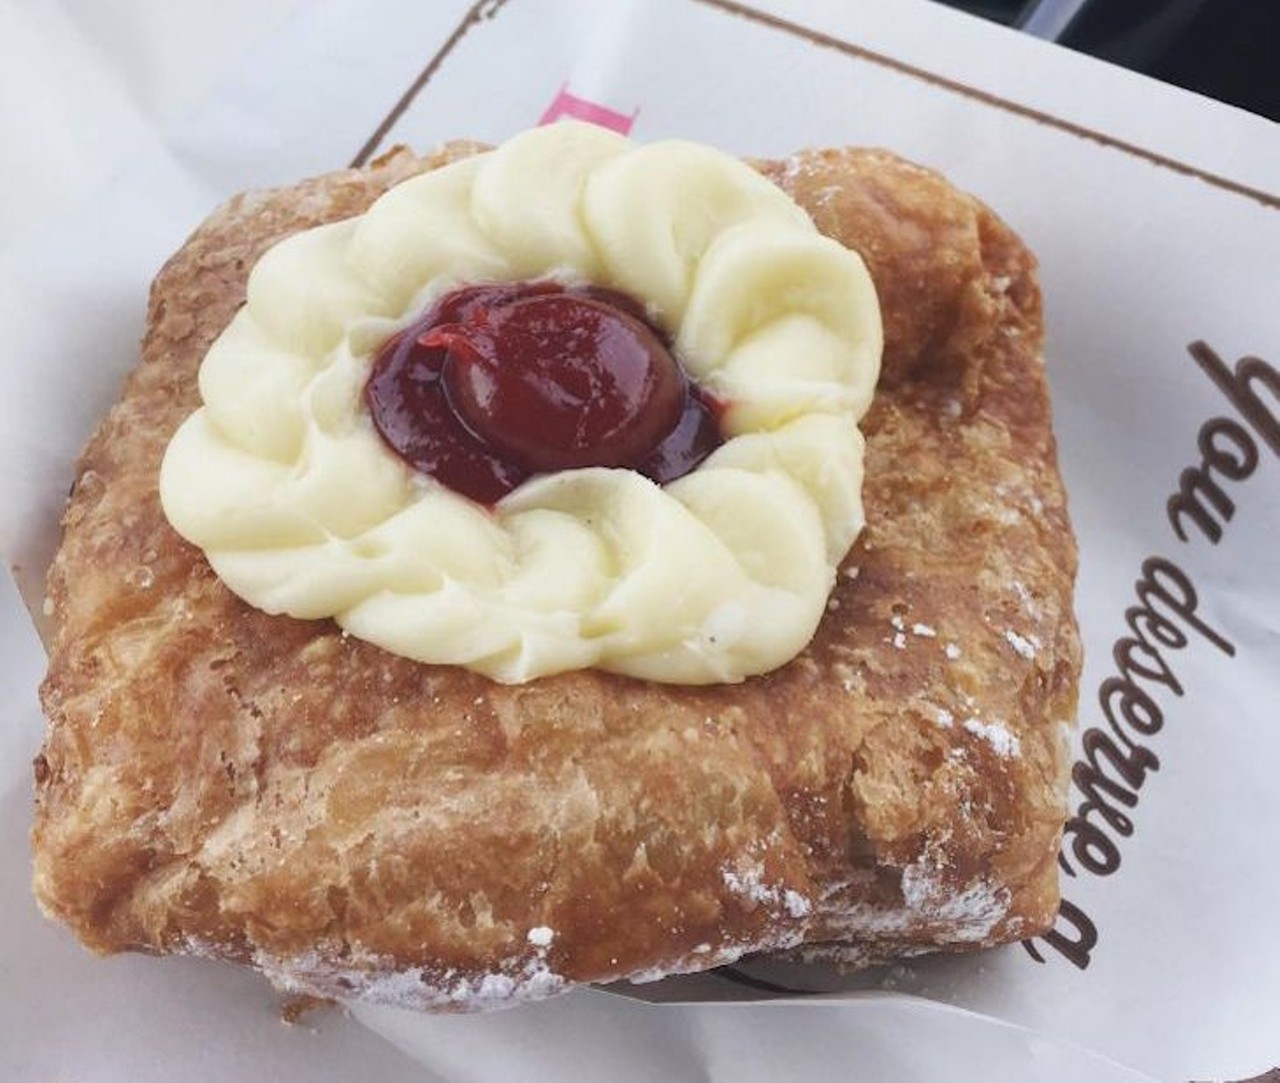 Must try: Guava Cheesecake Cronut
Photo via rawrockkillz23/Instagram